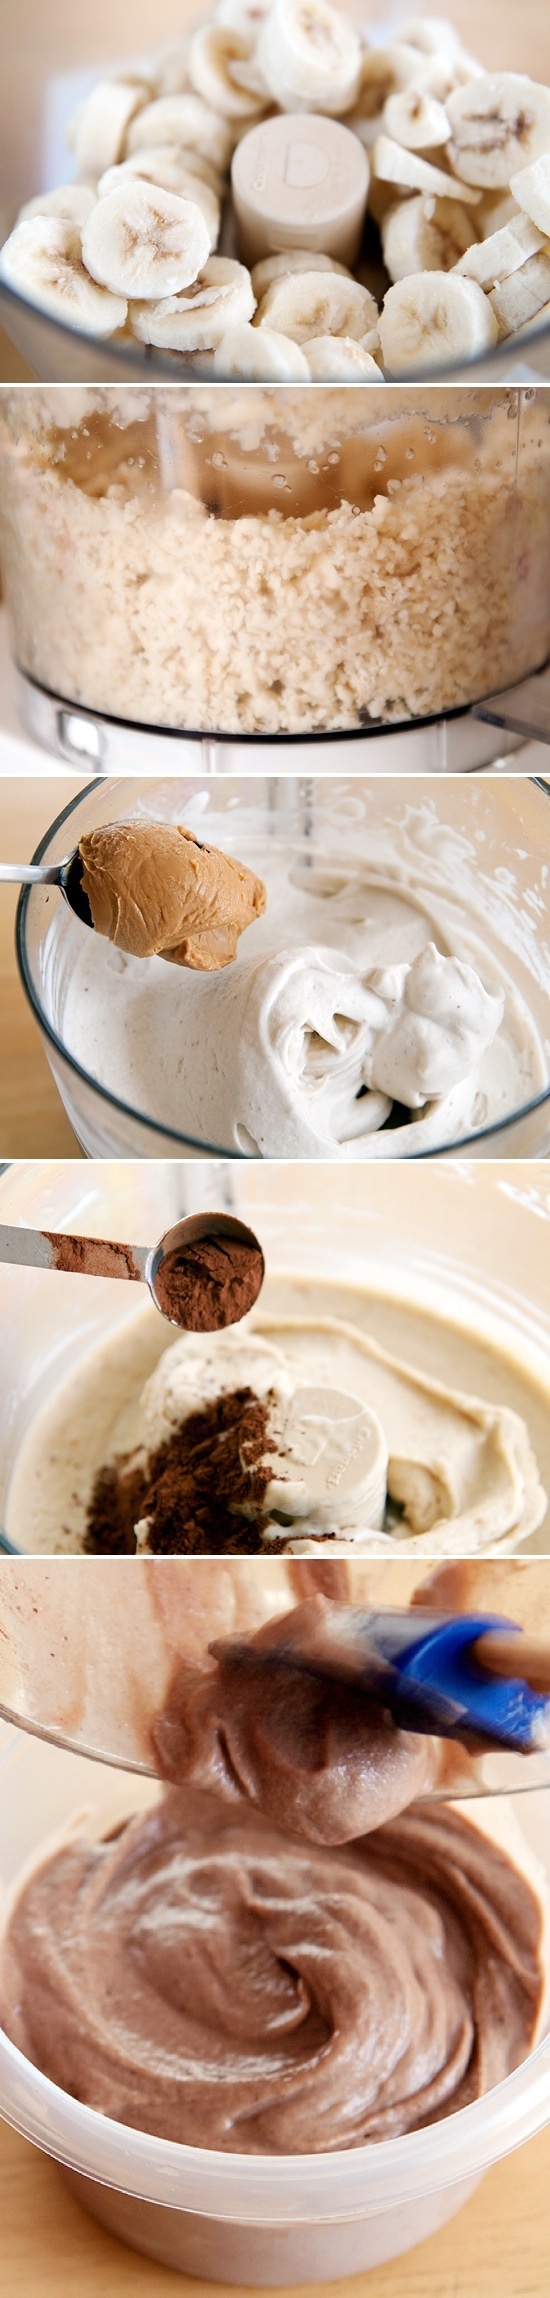 Homemade-Banana-ice-cream-recipe